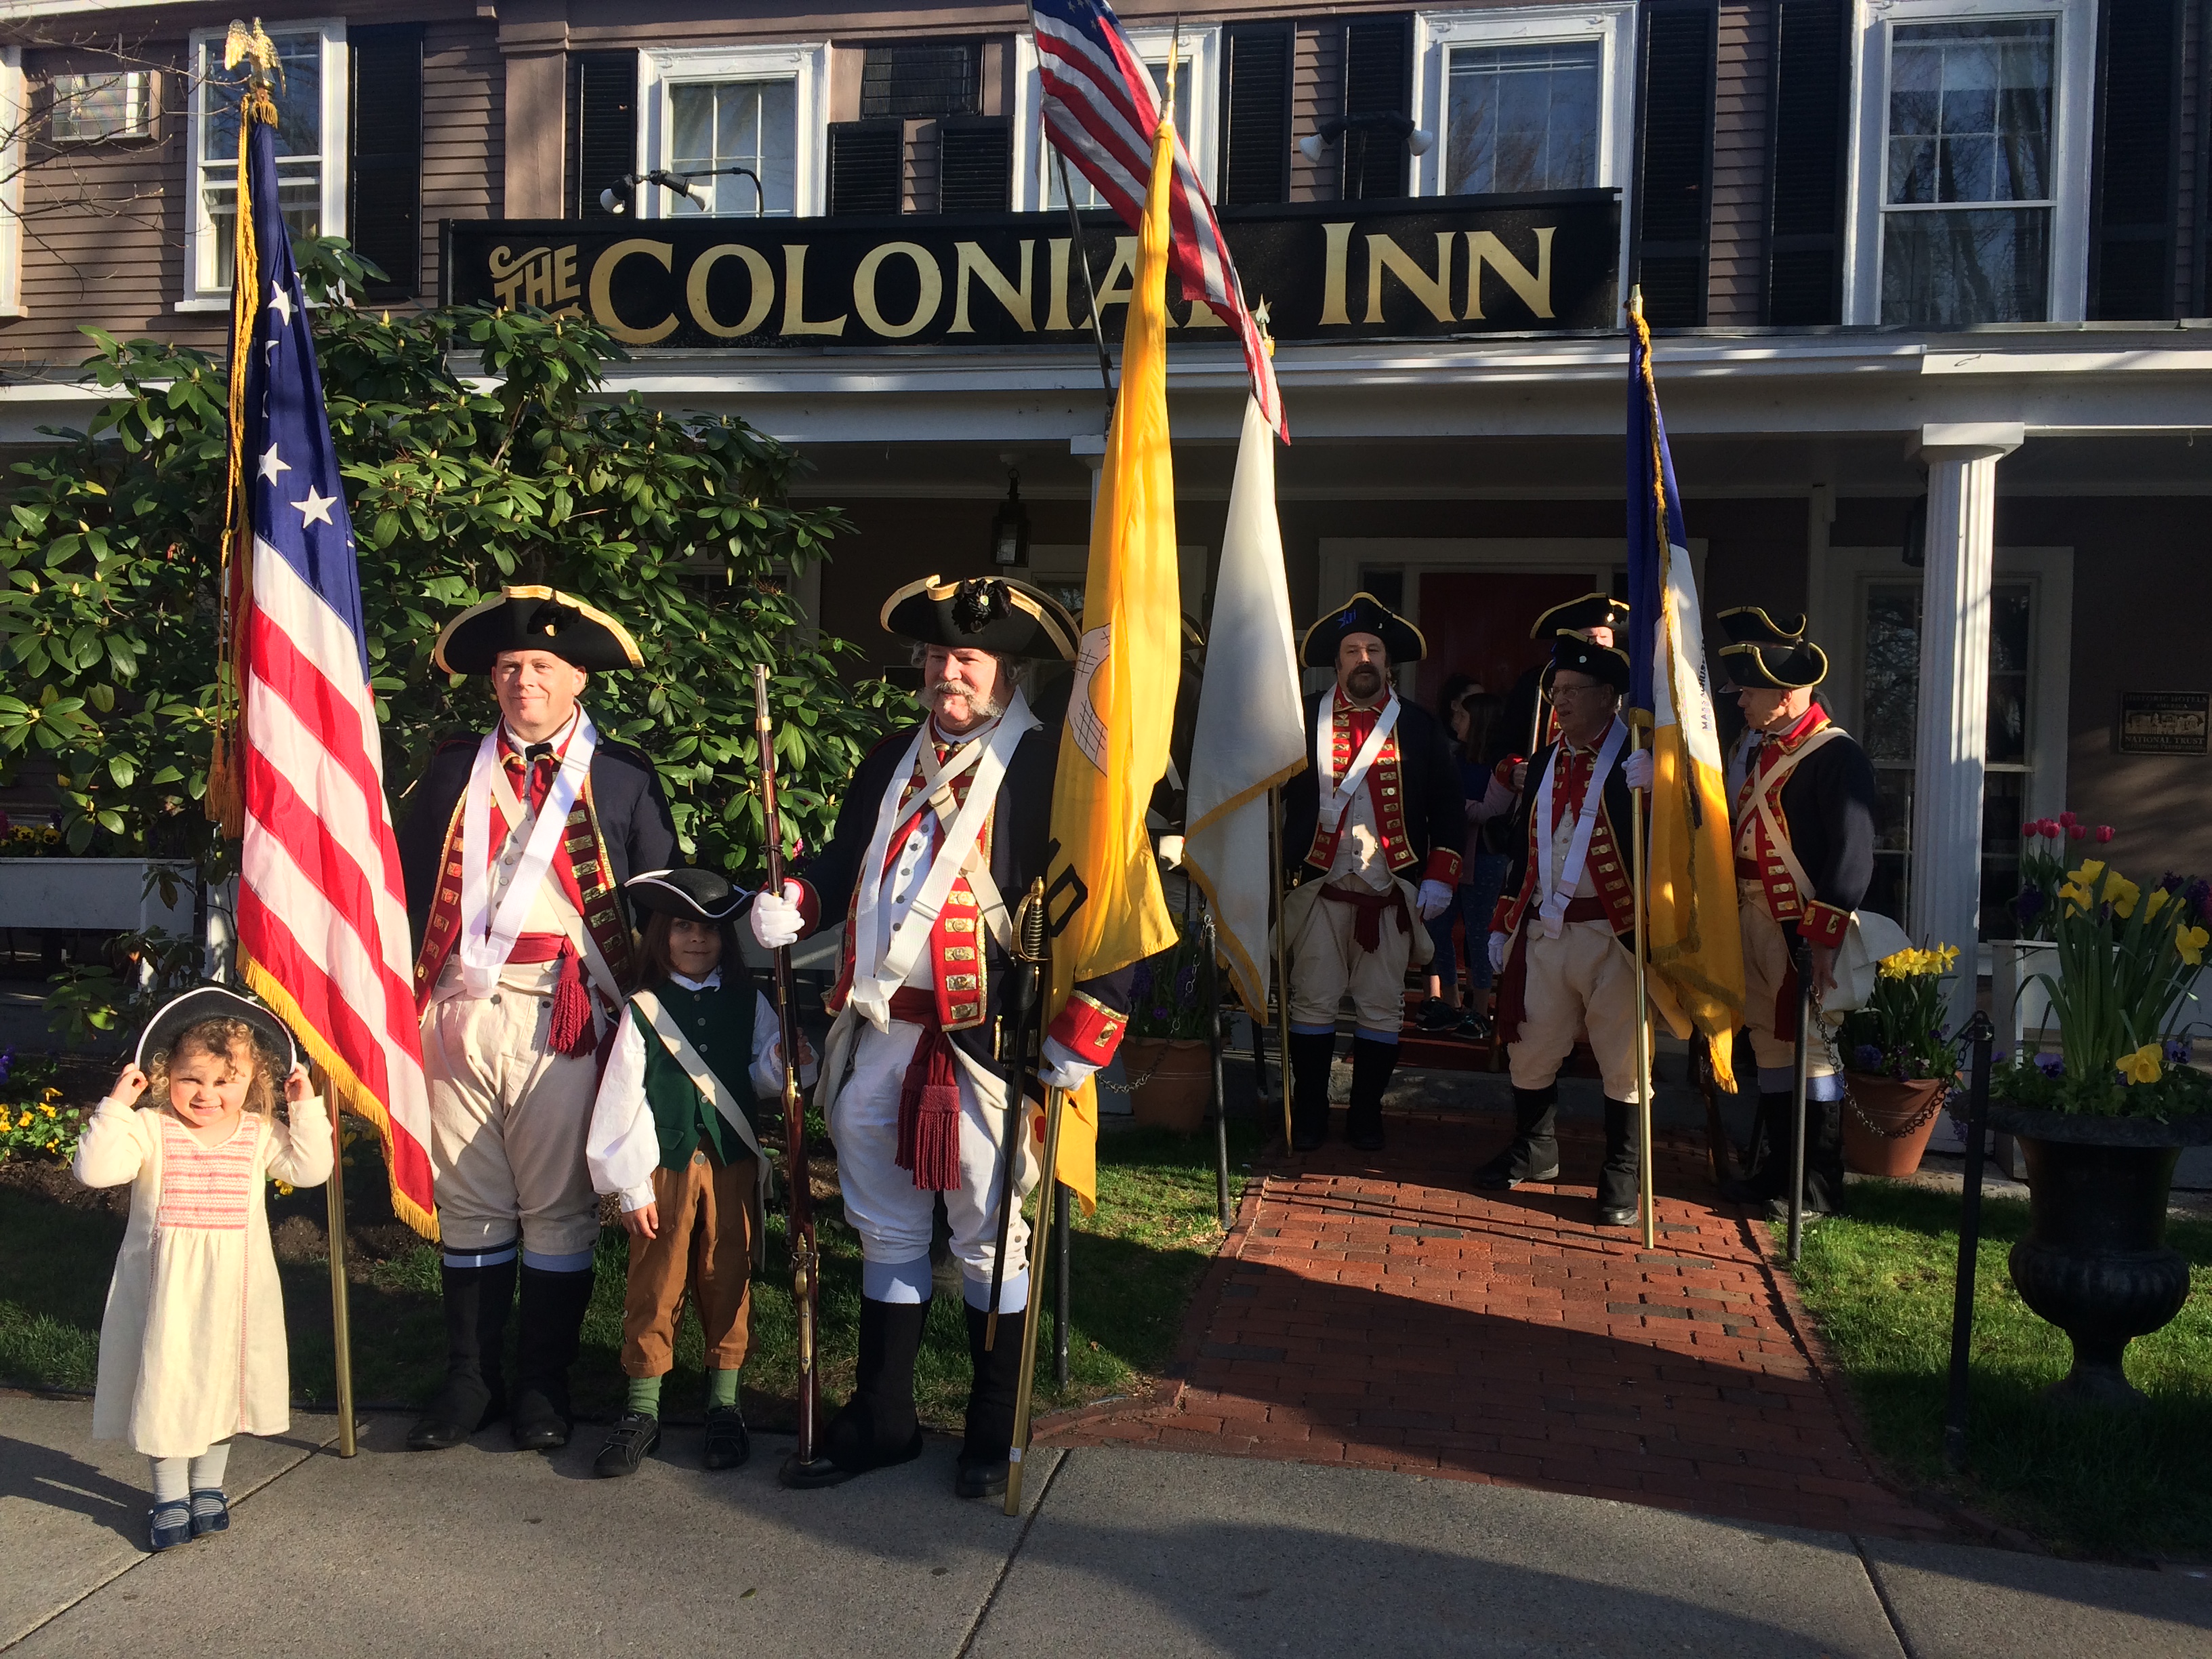 Concord Ma Hotel Massachusetts Historic Inn Concord S Colonial Inn